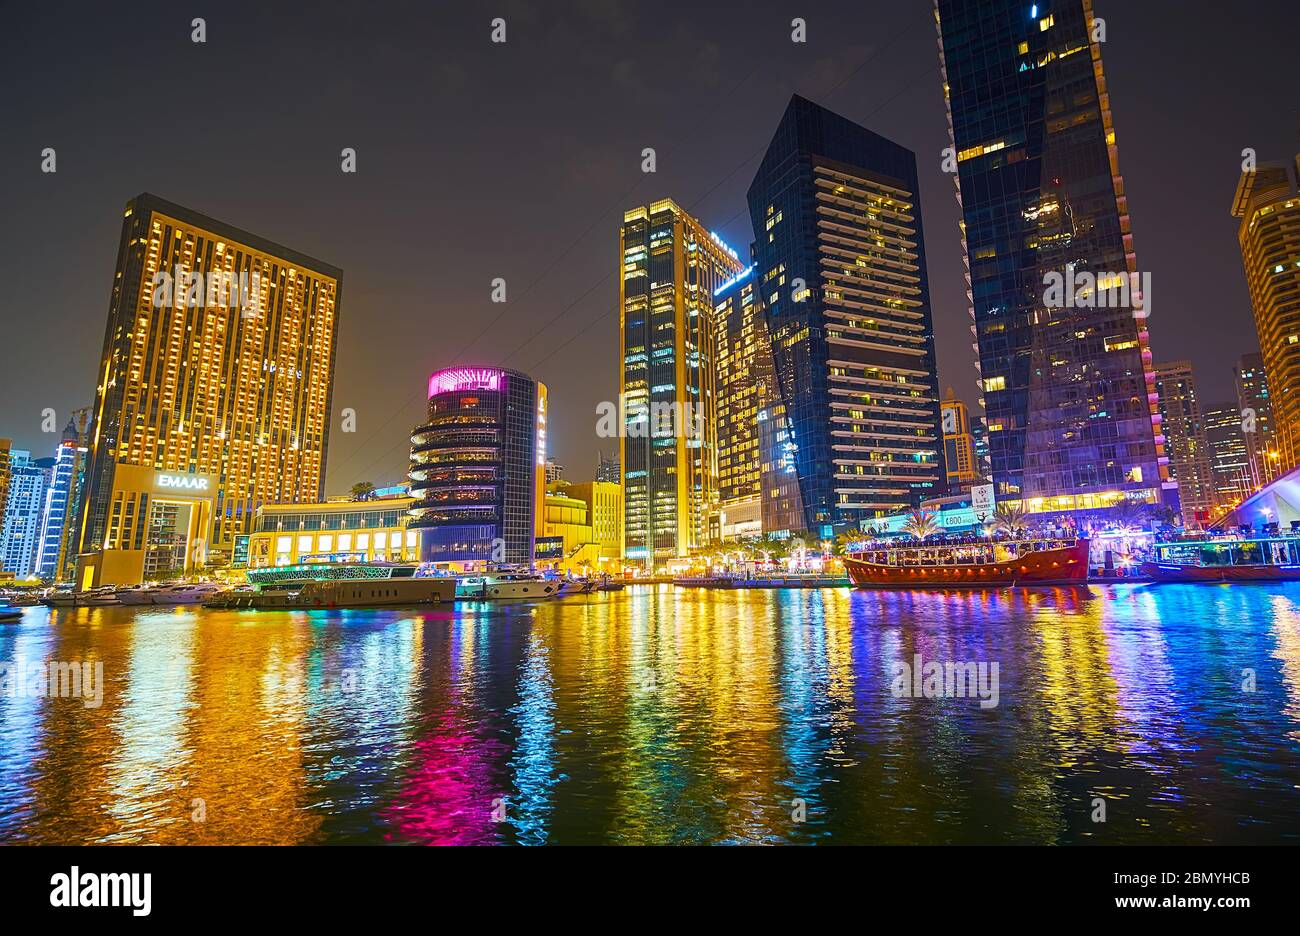 DUBAI, UAE - MARCH 2, 2020: Enjoy reflection of colorful illumination of glass skyscrapers, buildings of Address Dubai Marina, Pier 7 and Marina Mall, Stock Photo